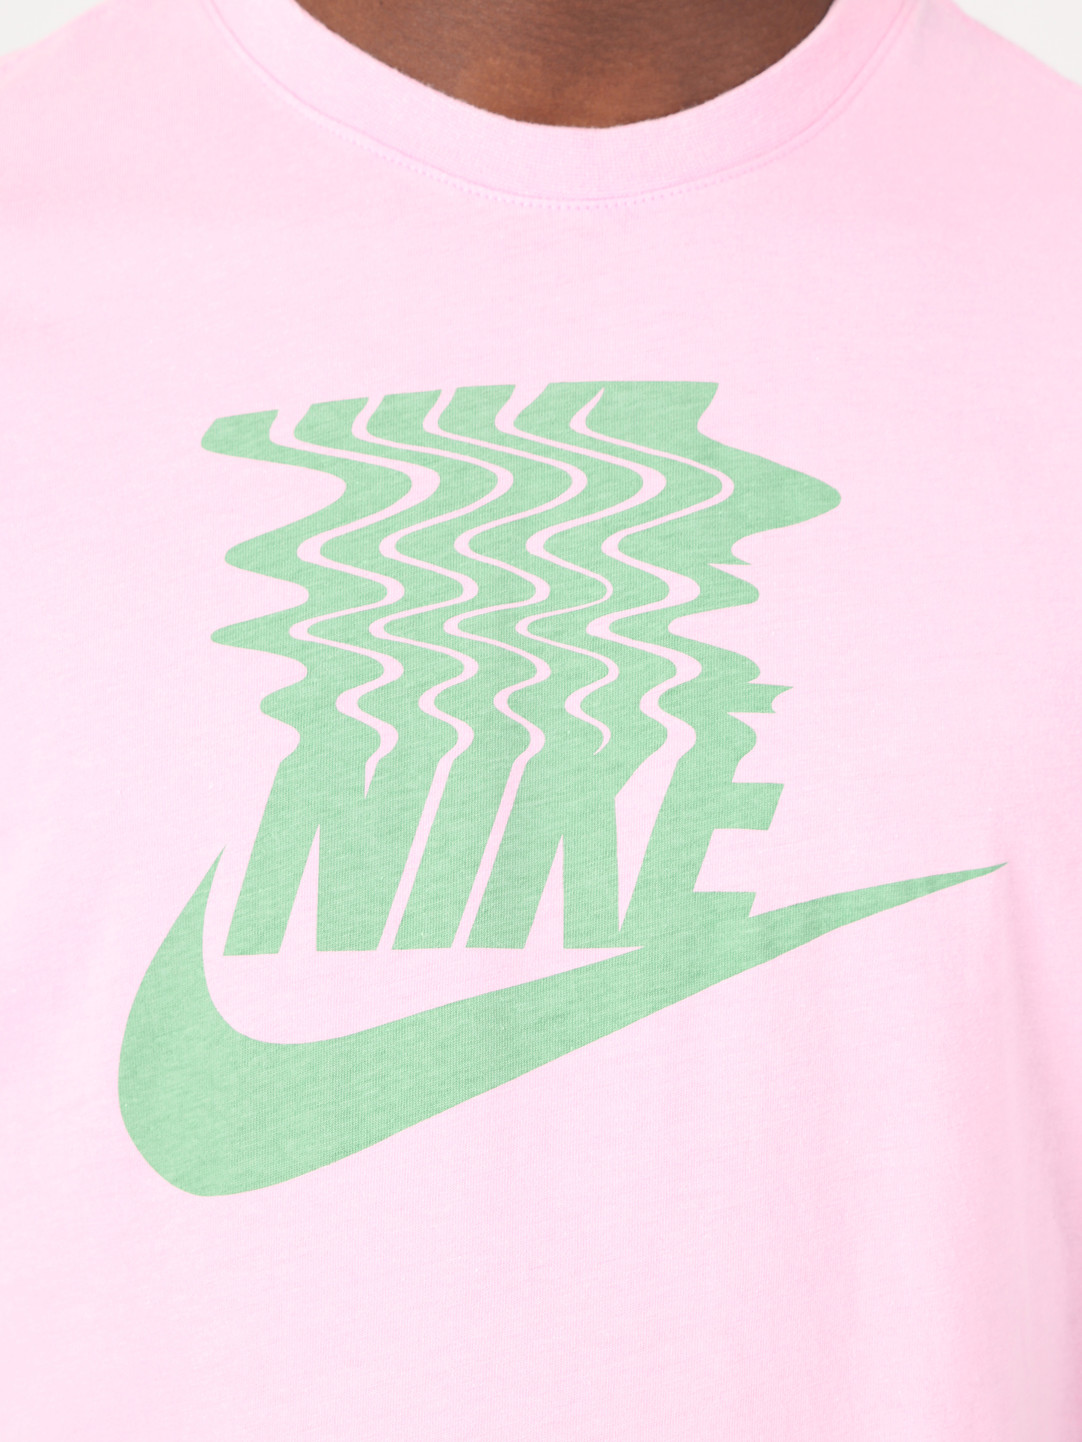 pink and green nike shirt